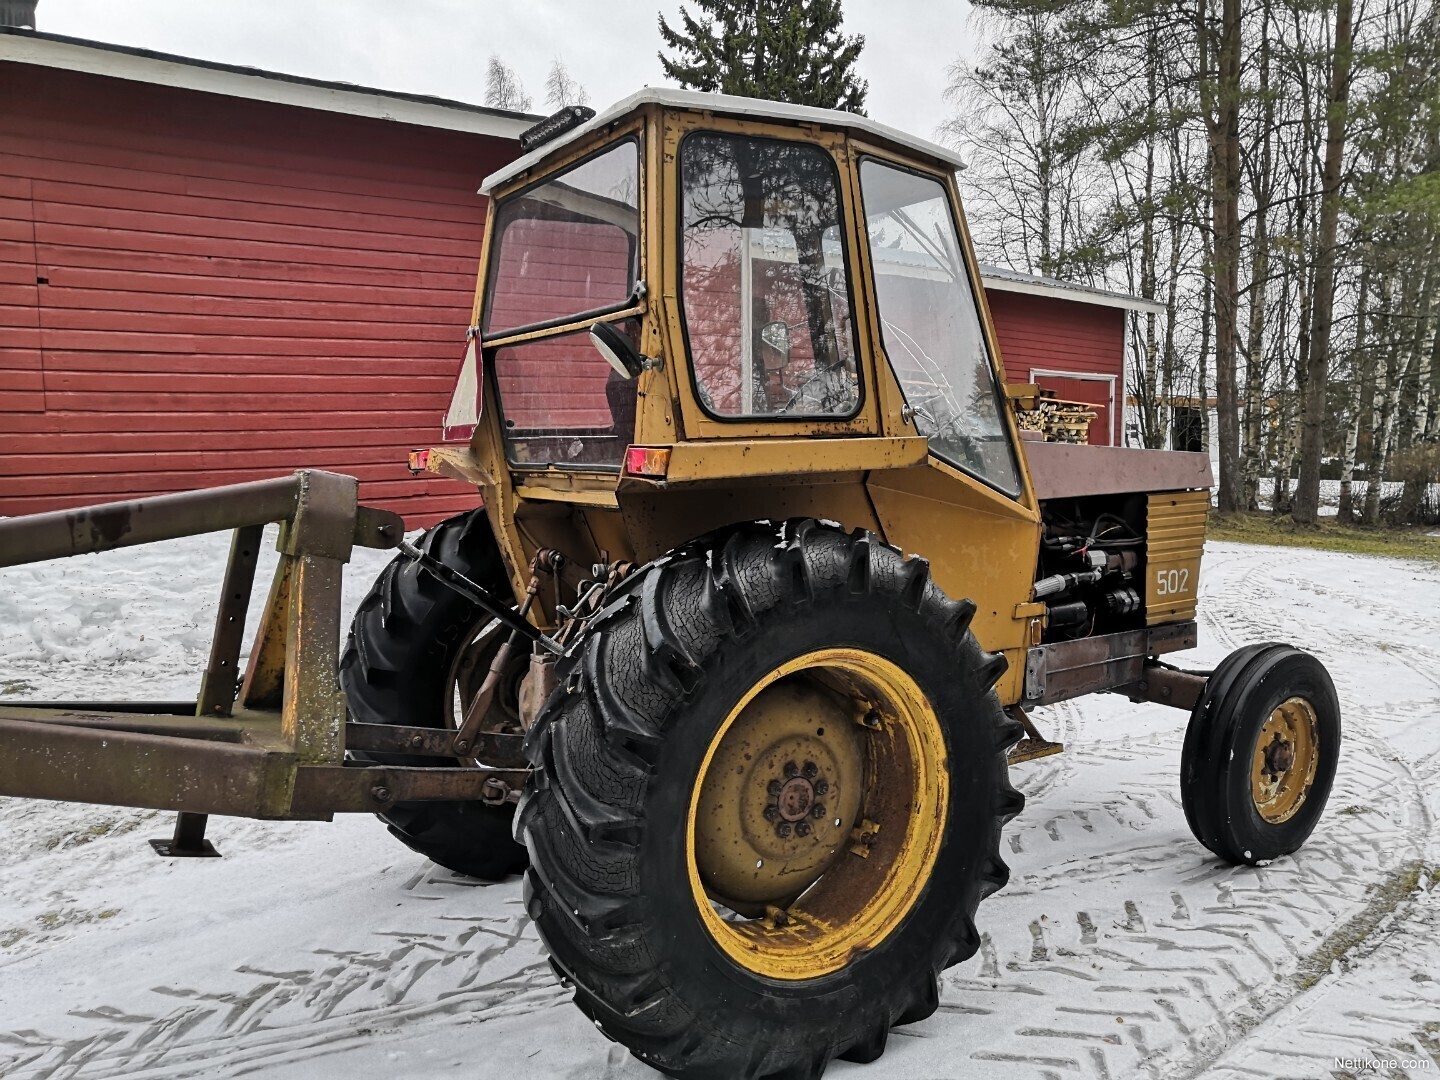 Valmet 502 tractors, 1973 - Nettikone